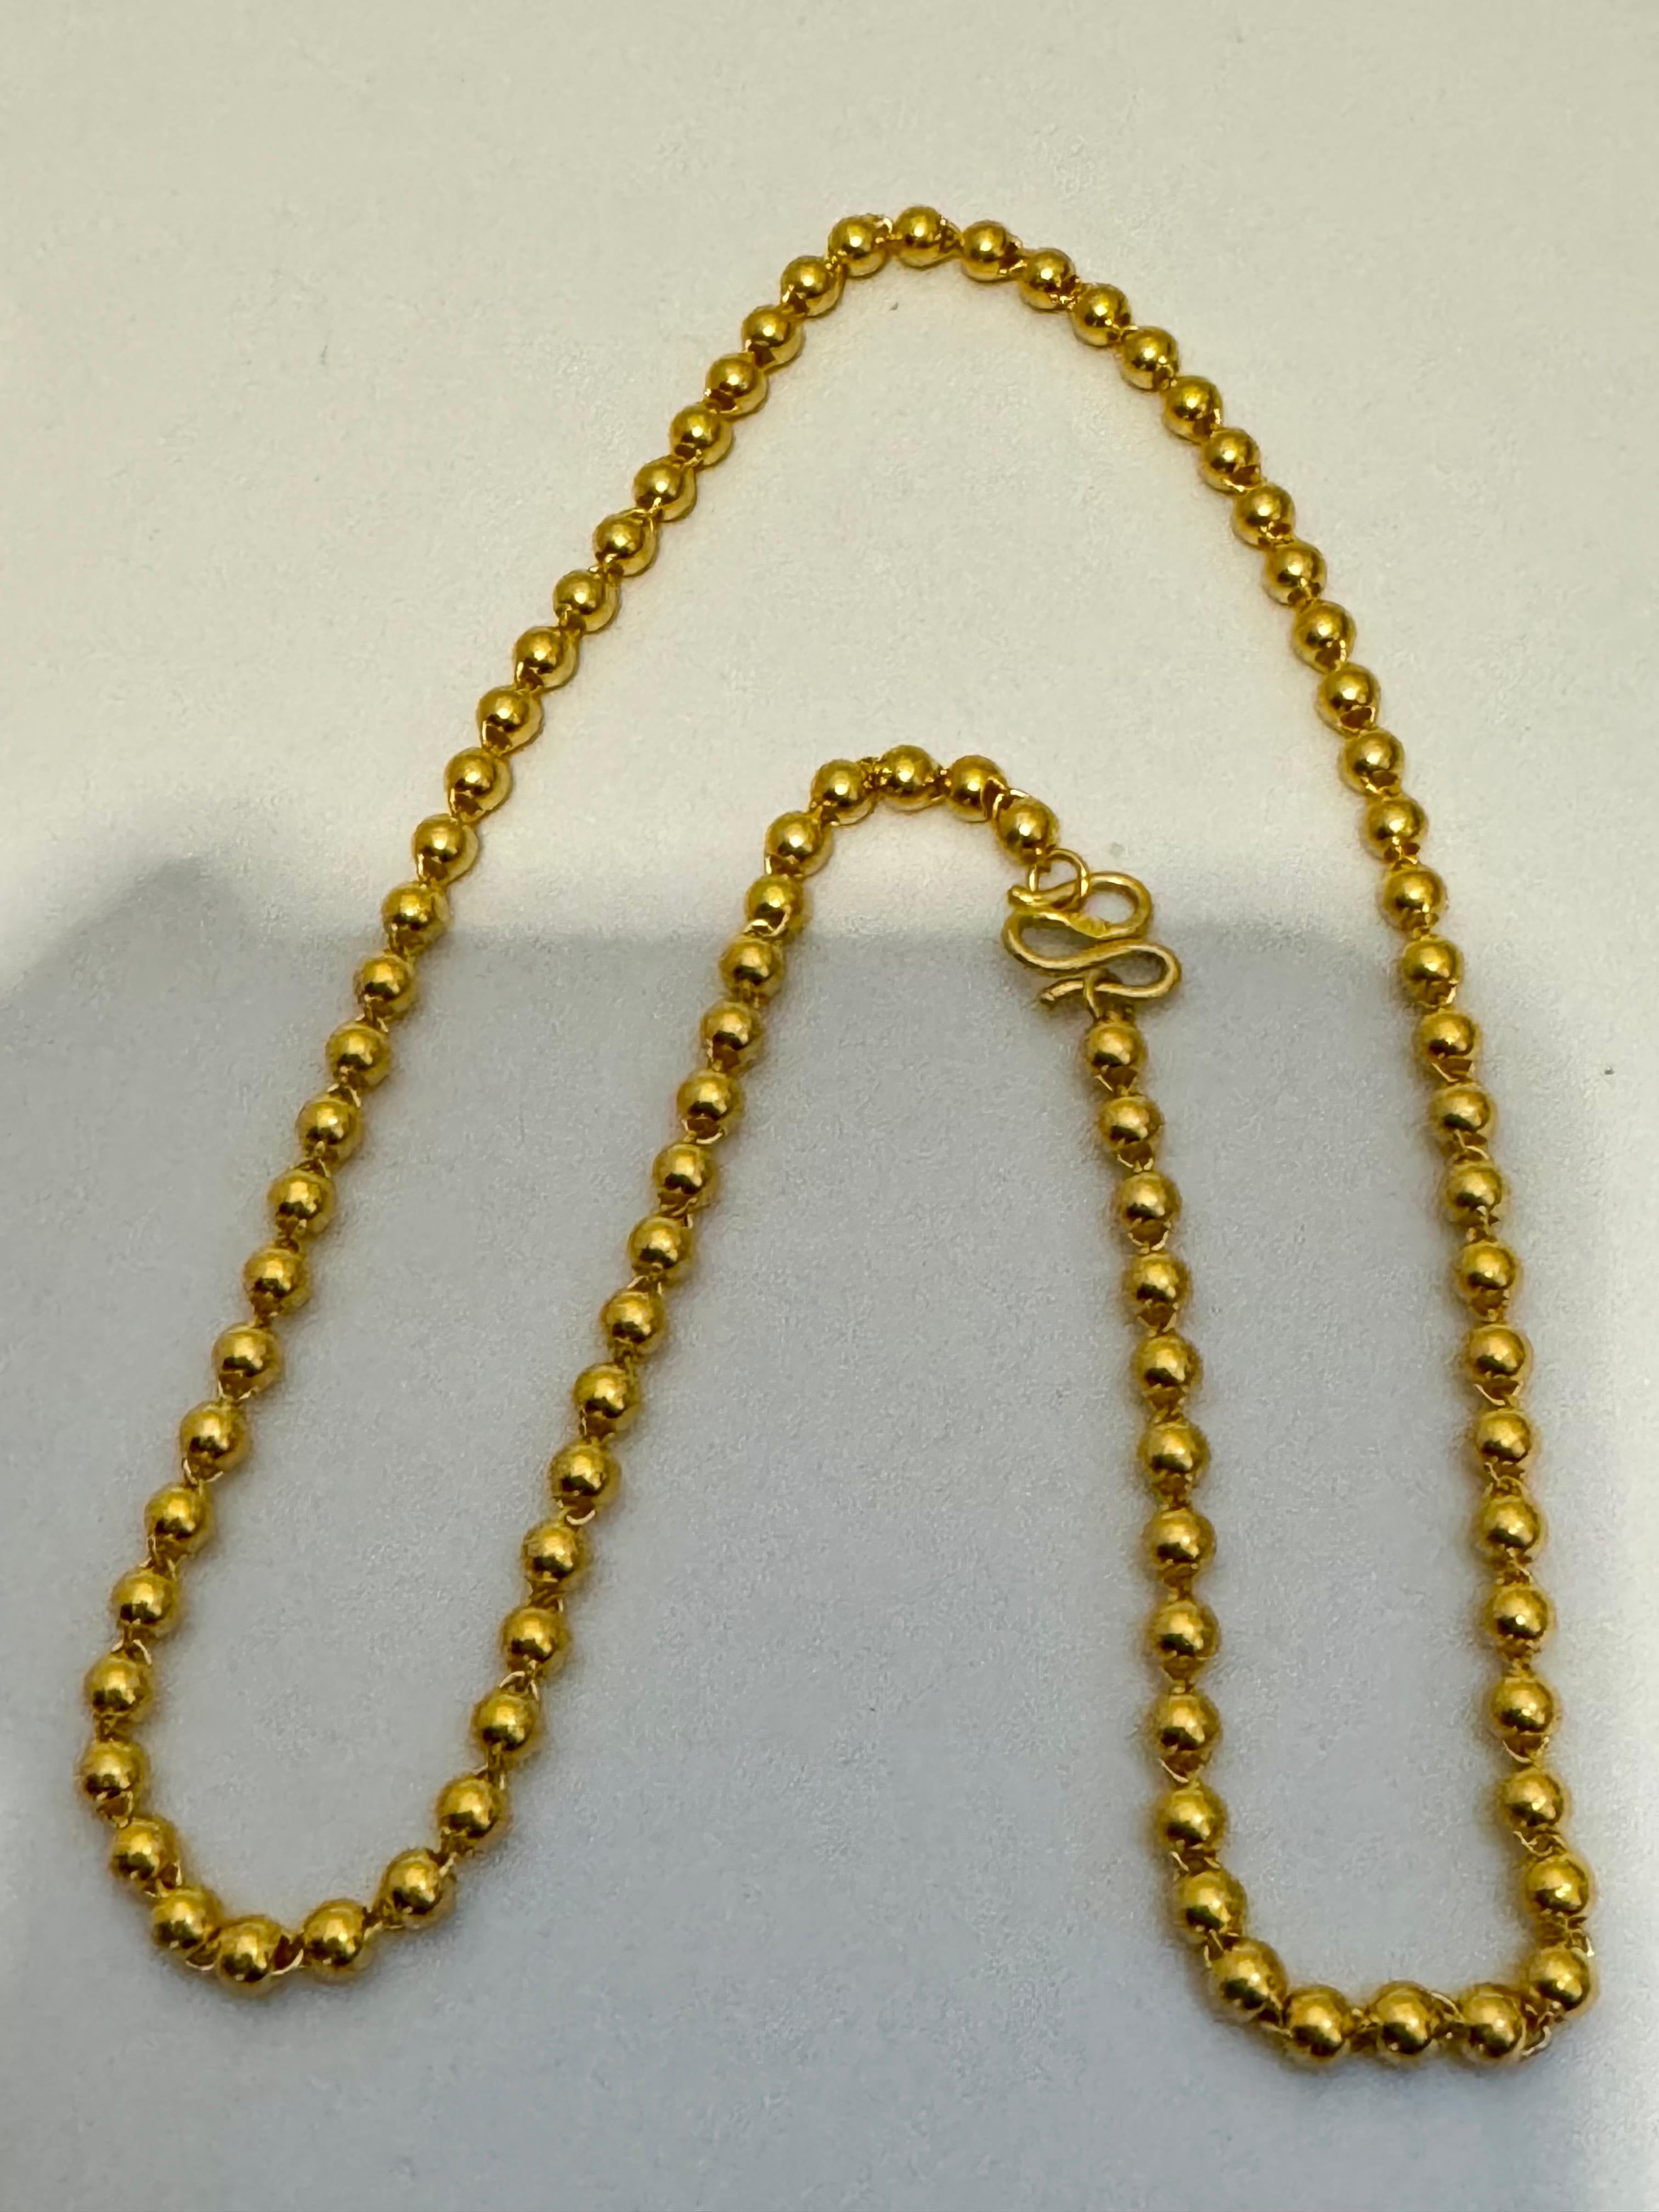 Vintage 19 Gm Pure 24 Karat Yellow Gold Handmade Ball Chain 17 inch long 3